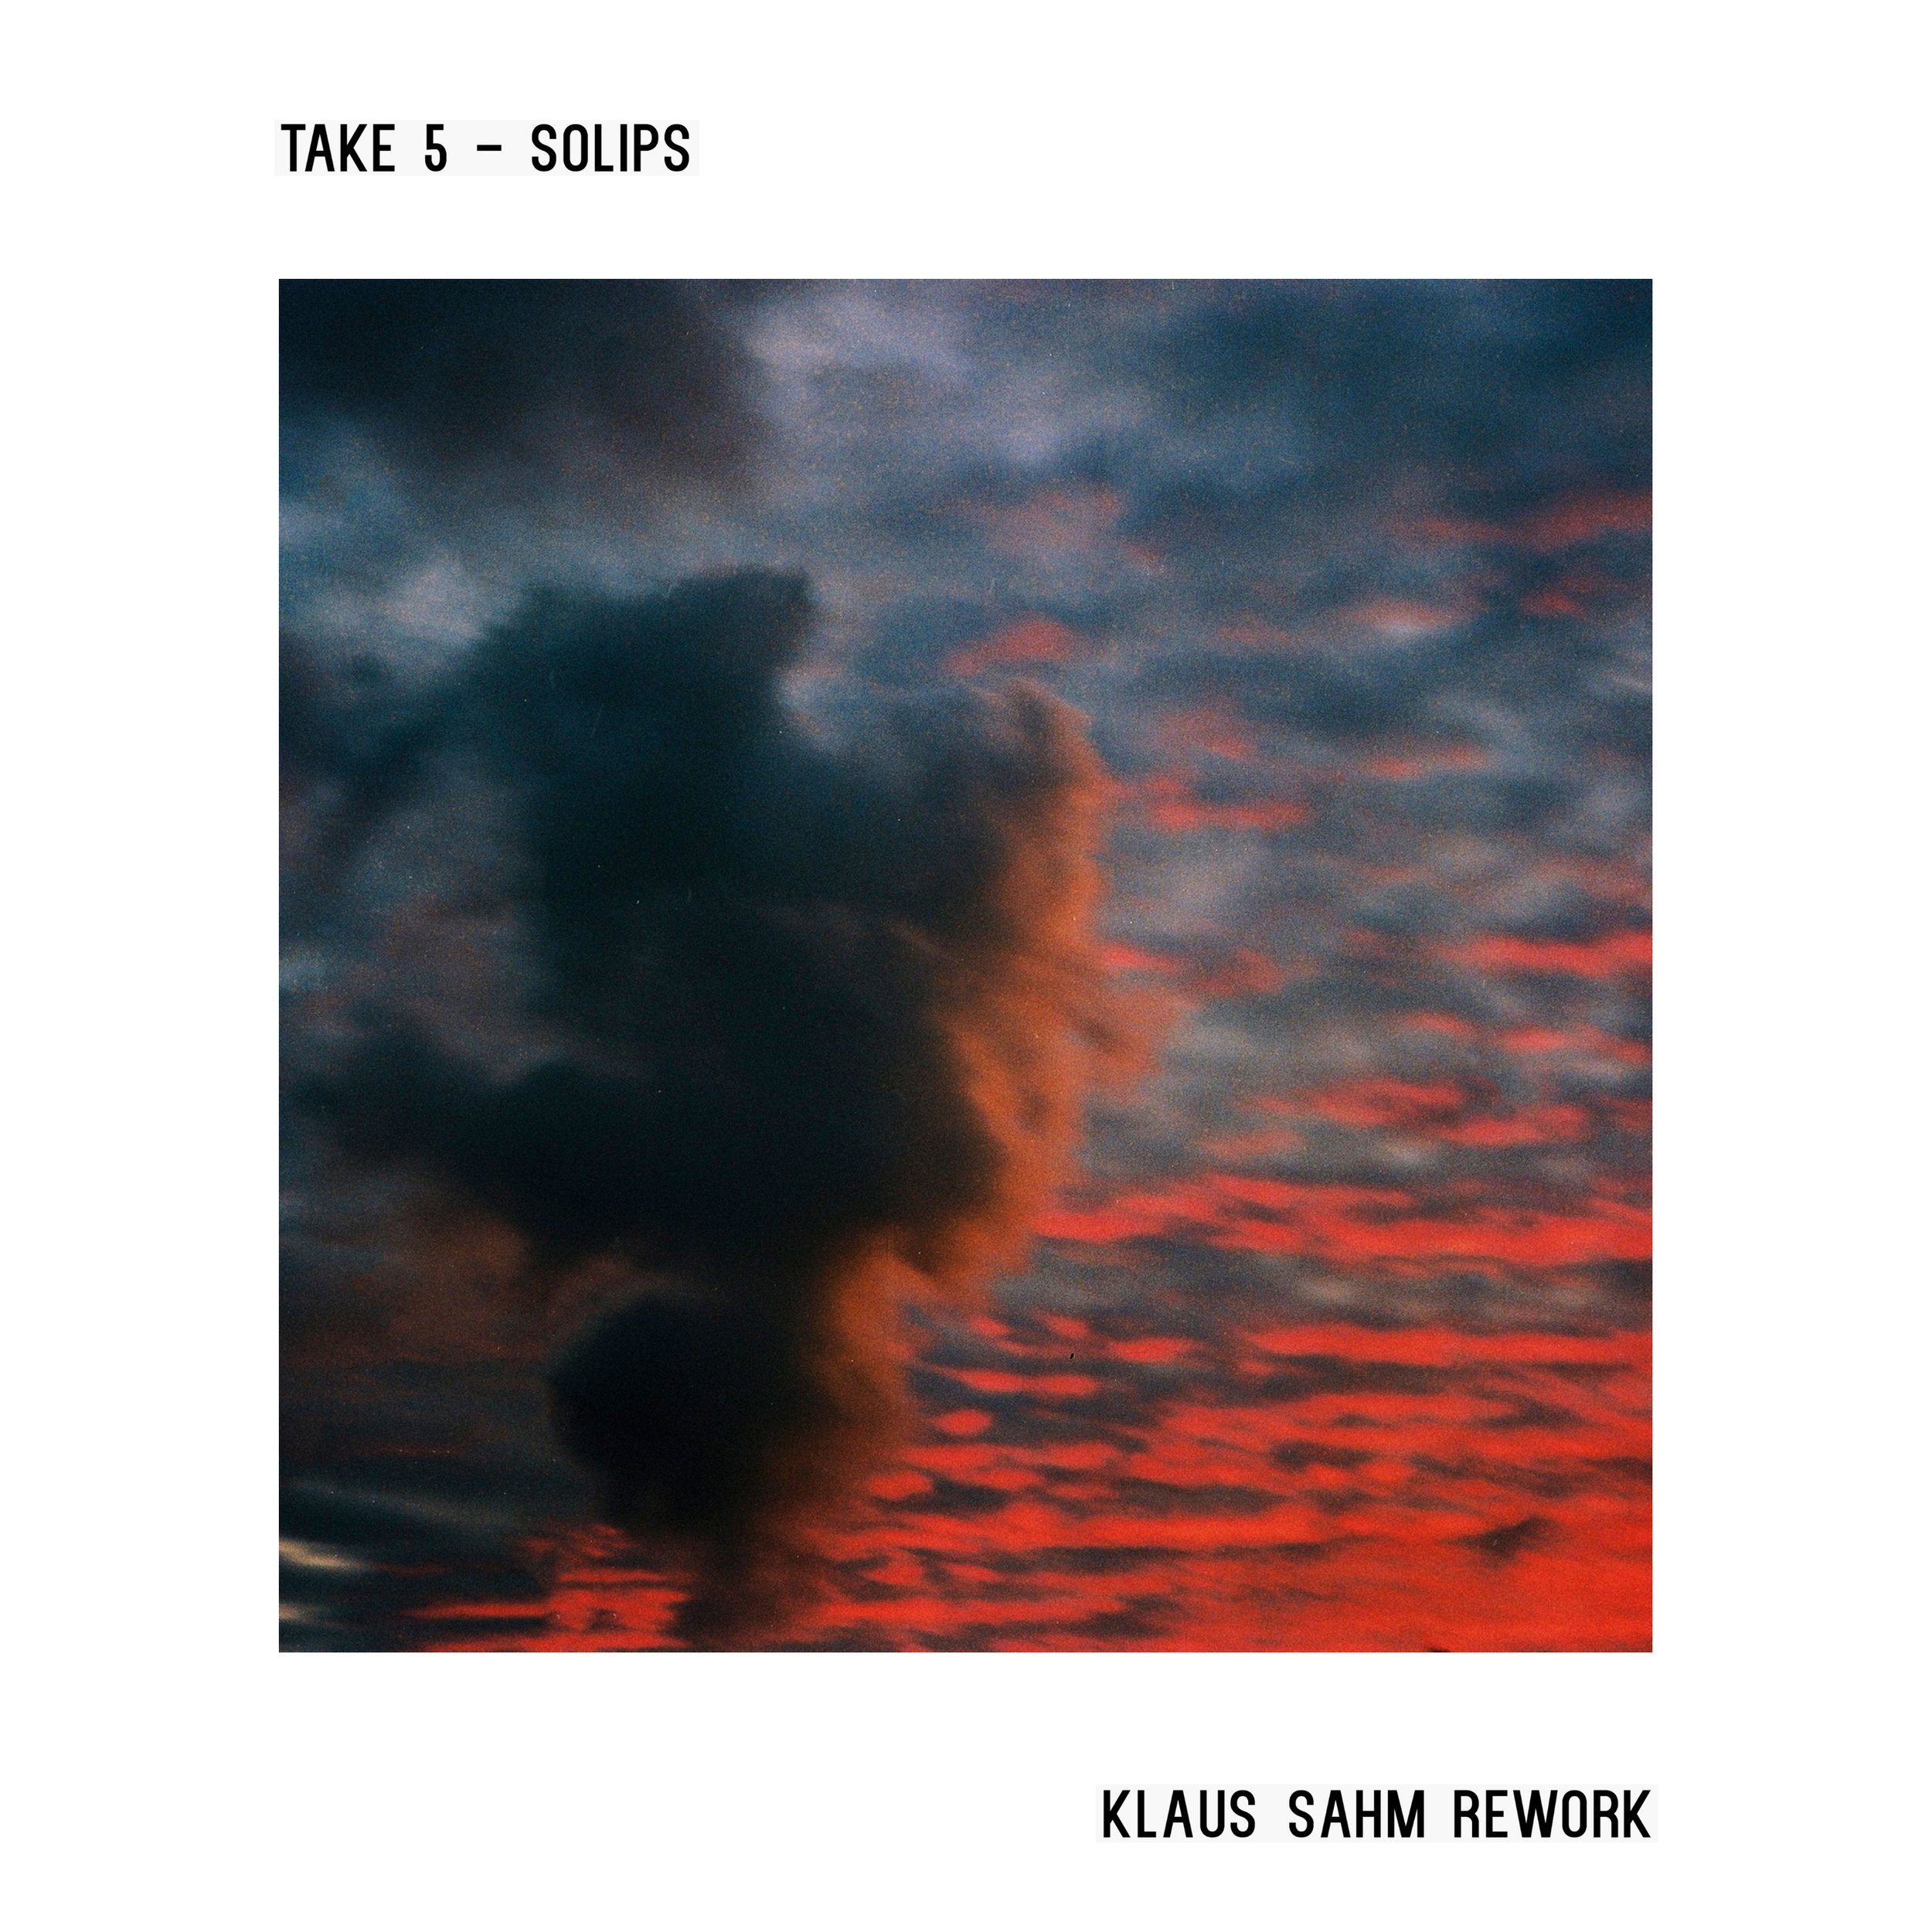 Cover - Take 5 - Solips - Klaus Sahm Rework.jpg